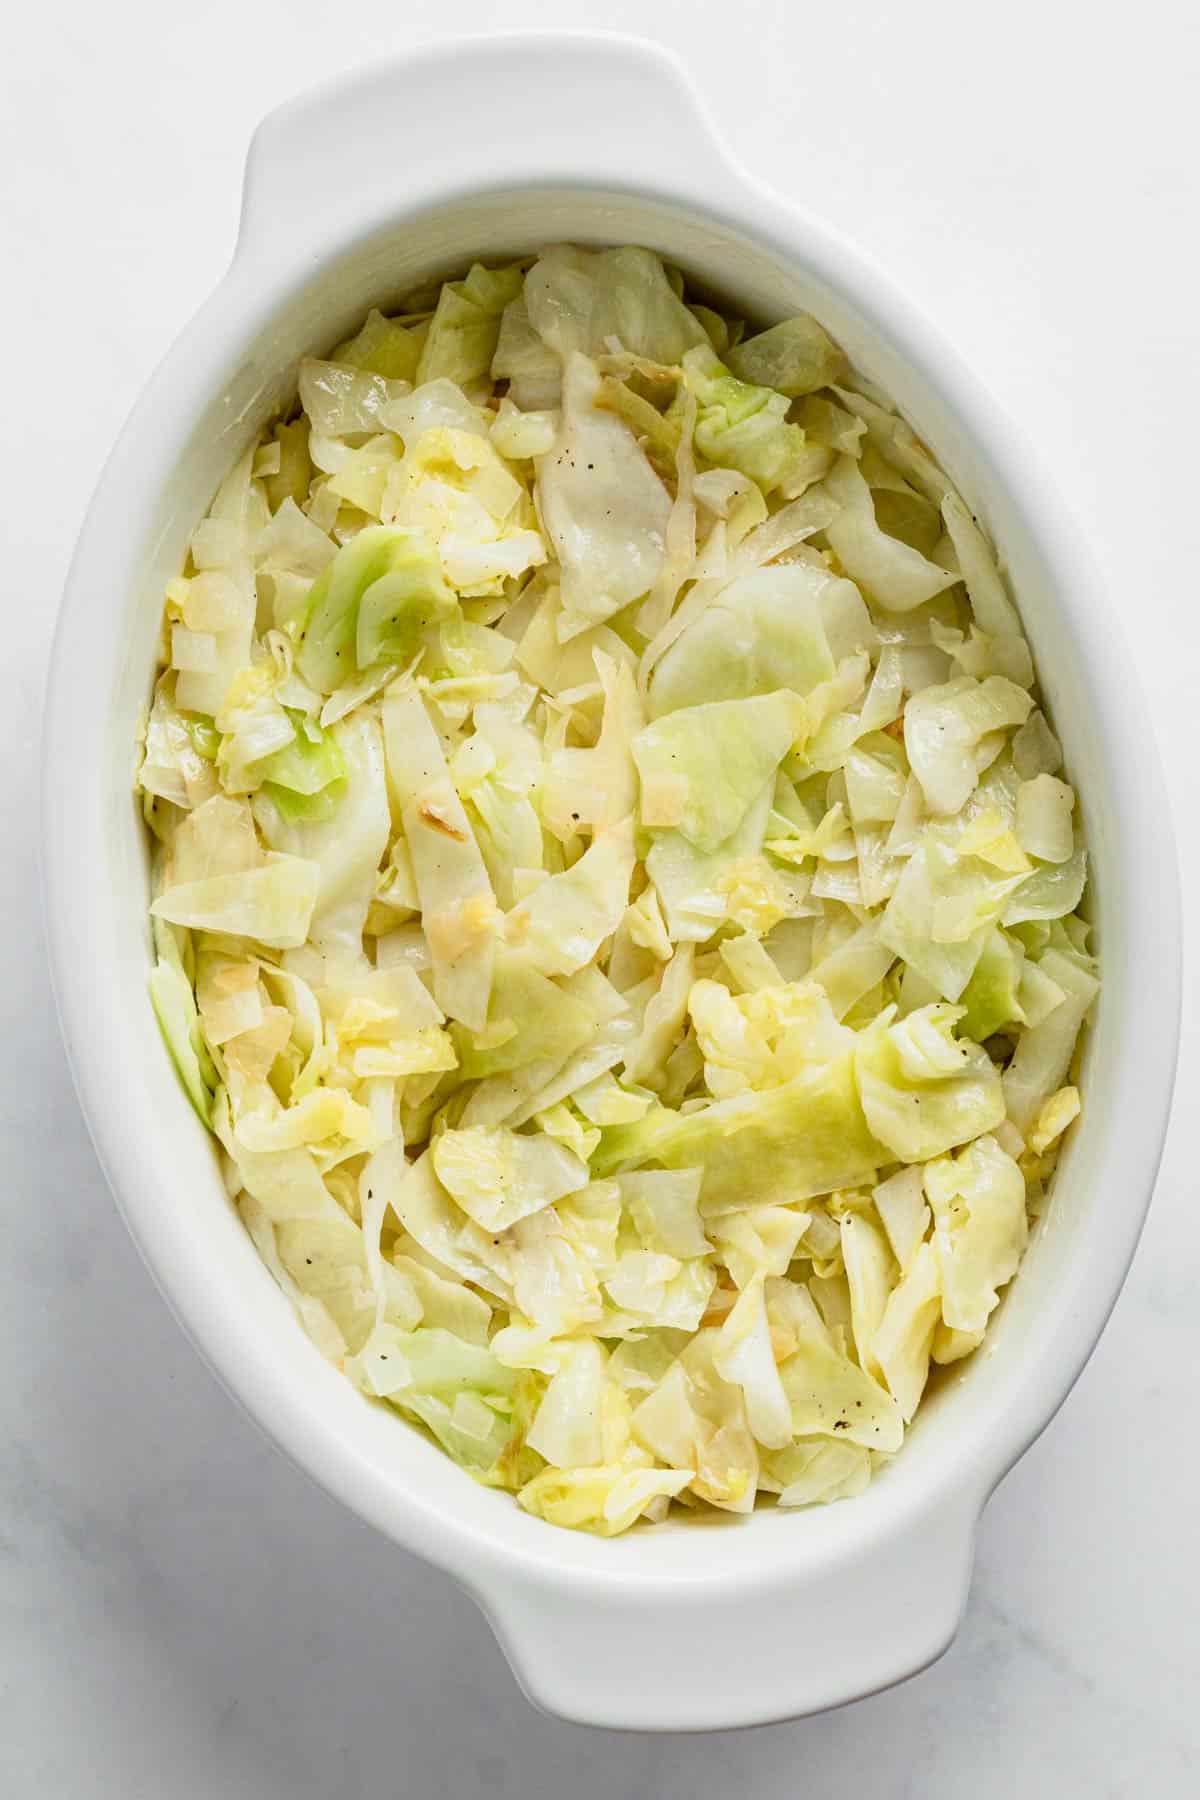 sauteed cabbage in casserole dish.